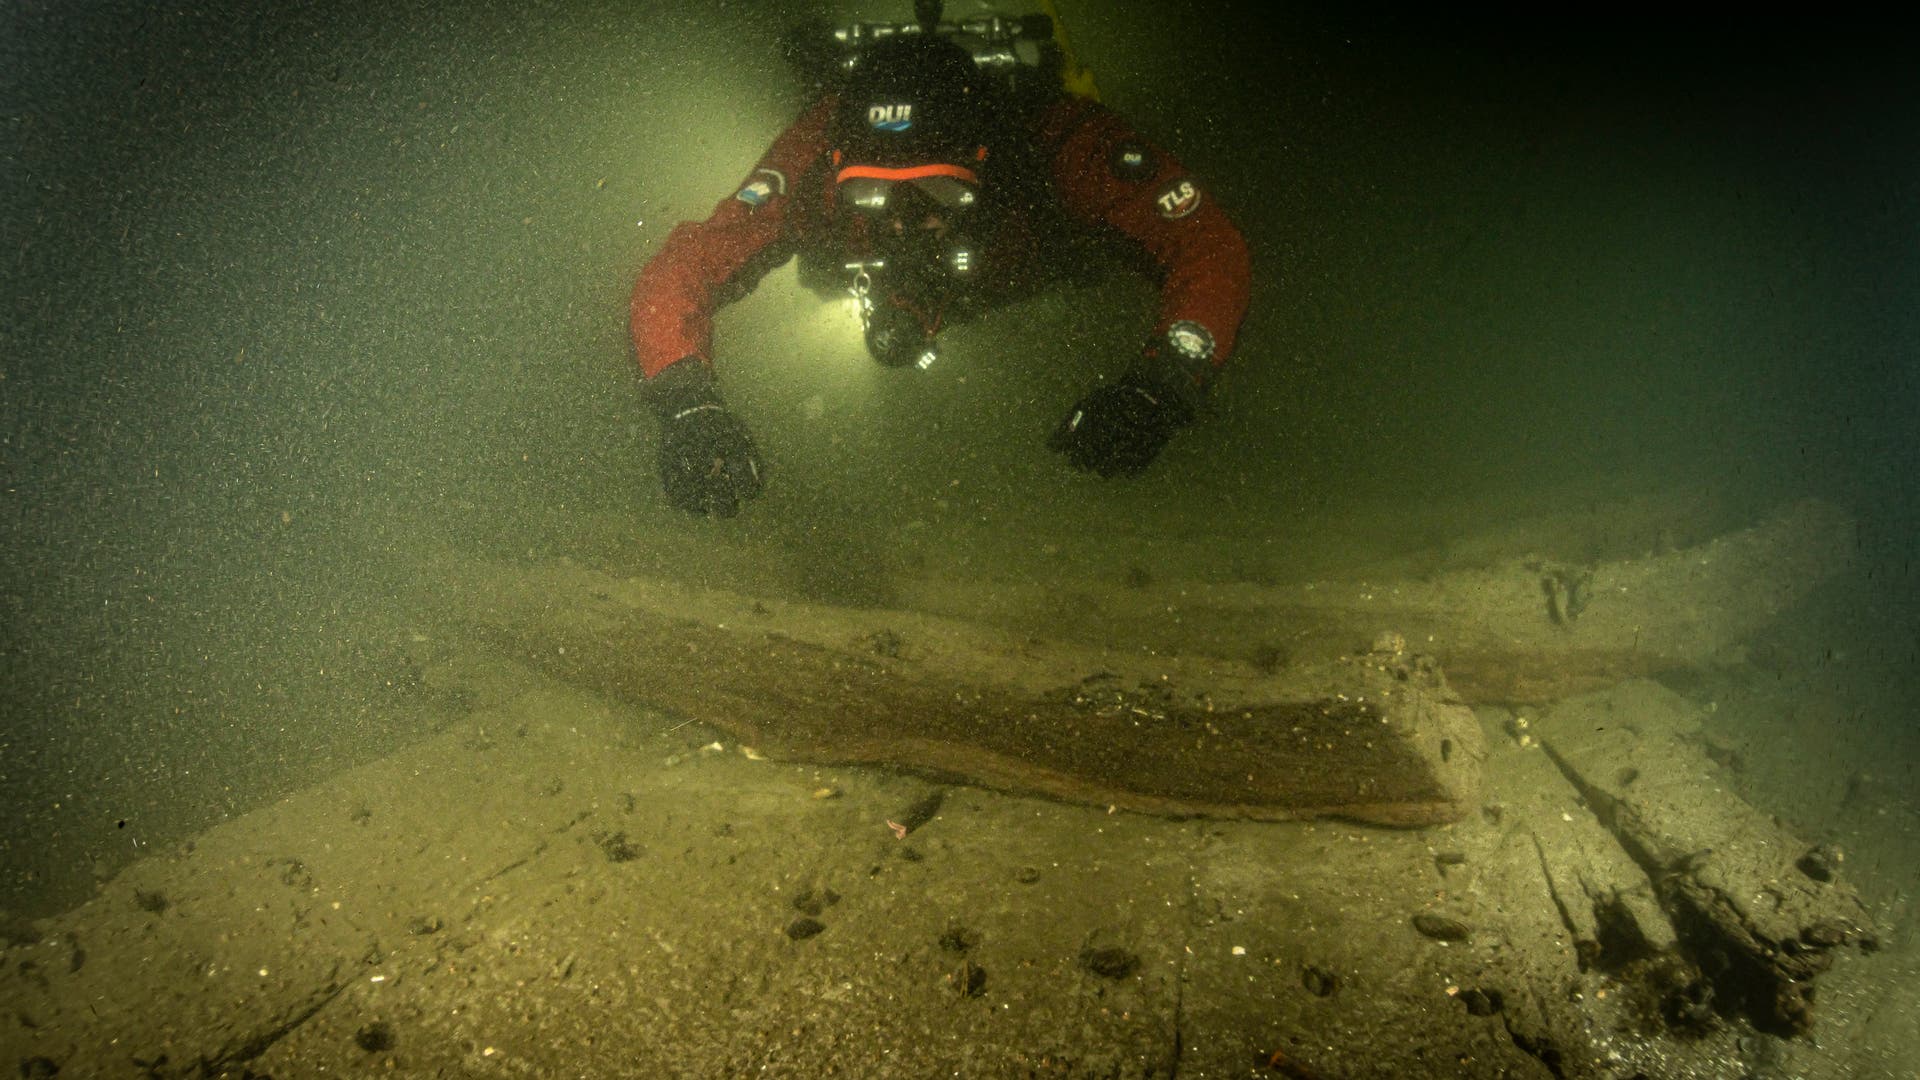 Discover a unique shipwreck from the Hanseatic era